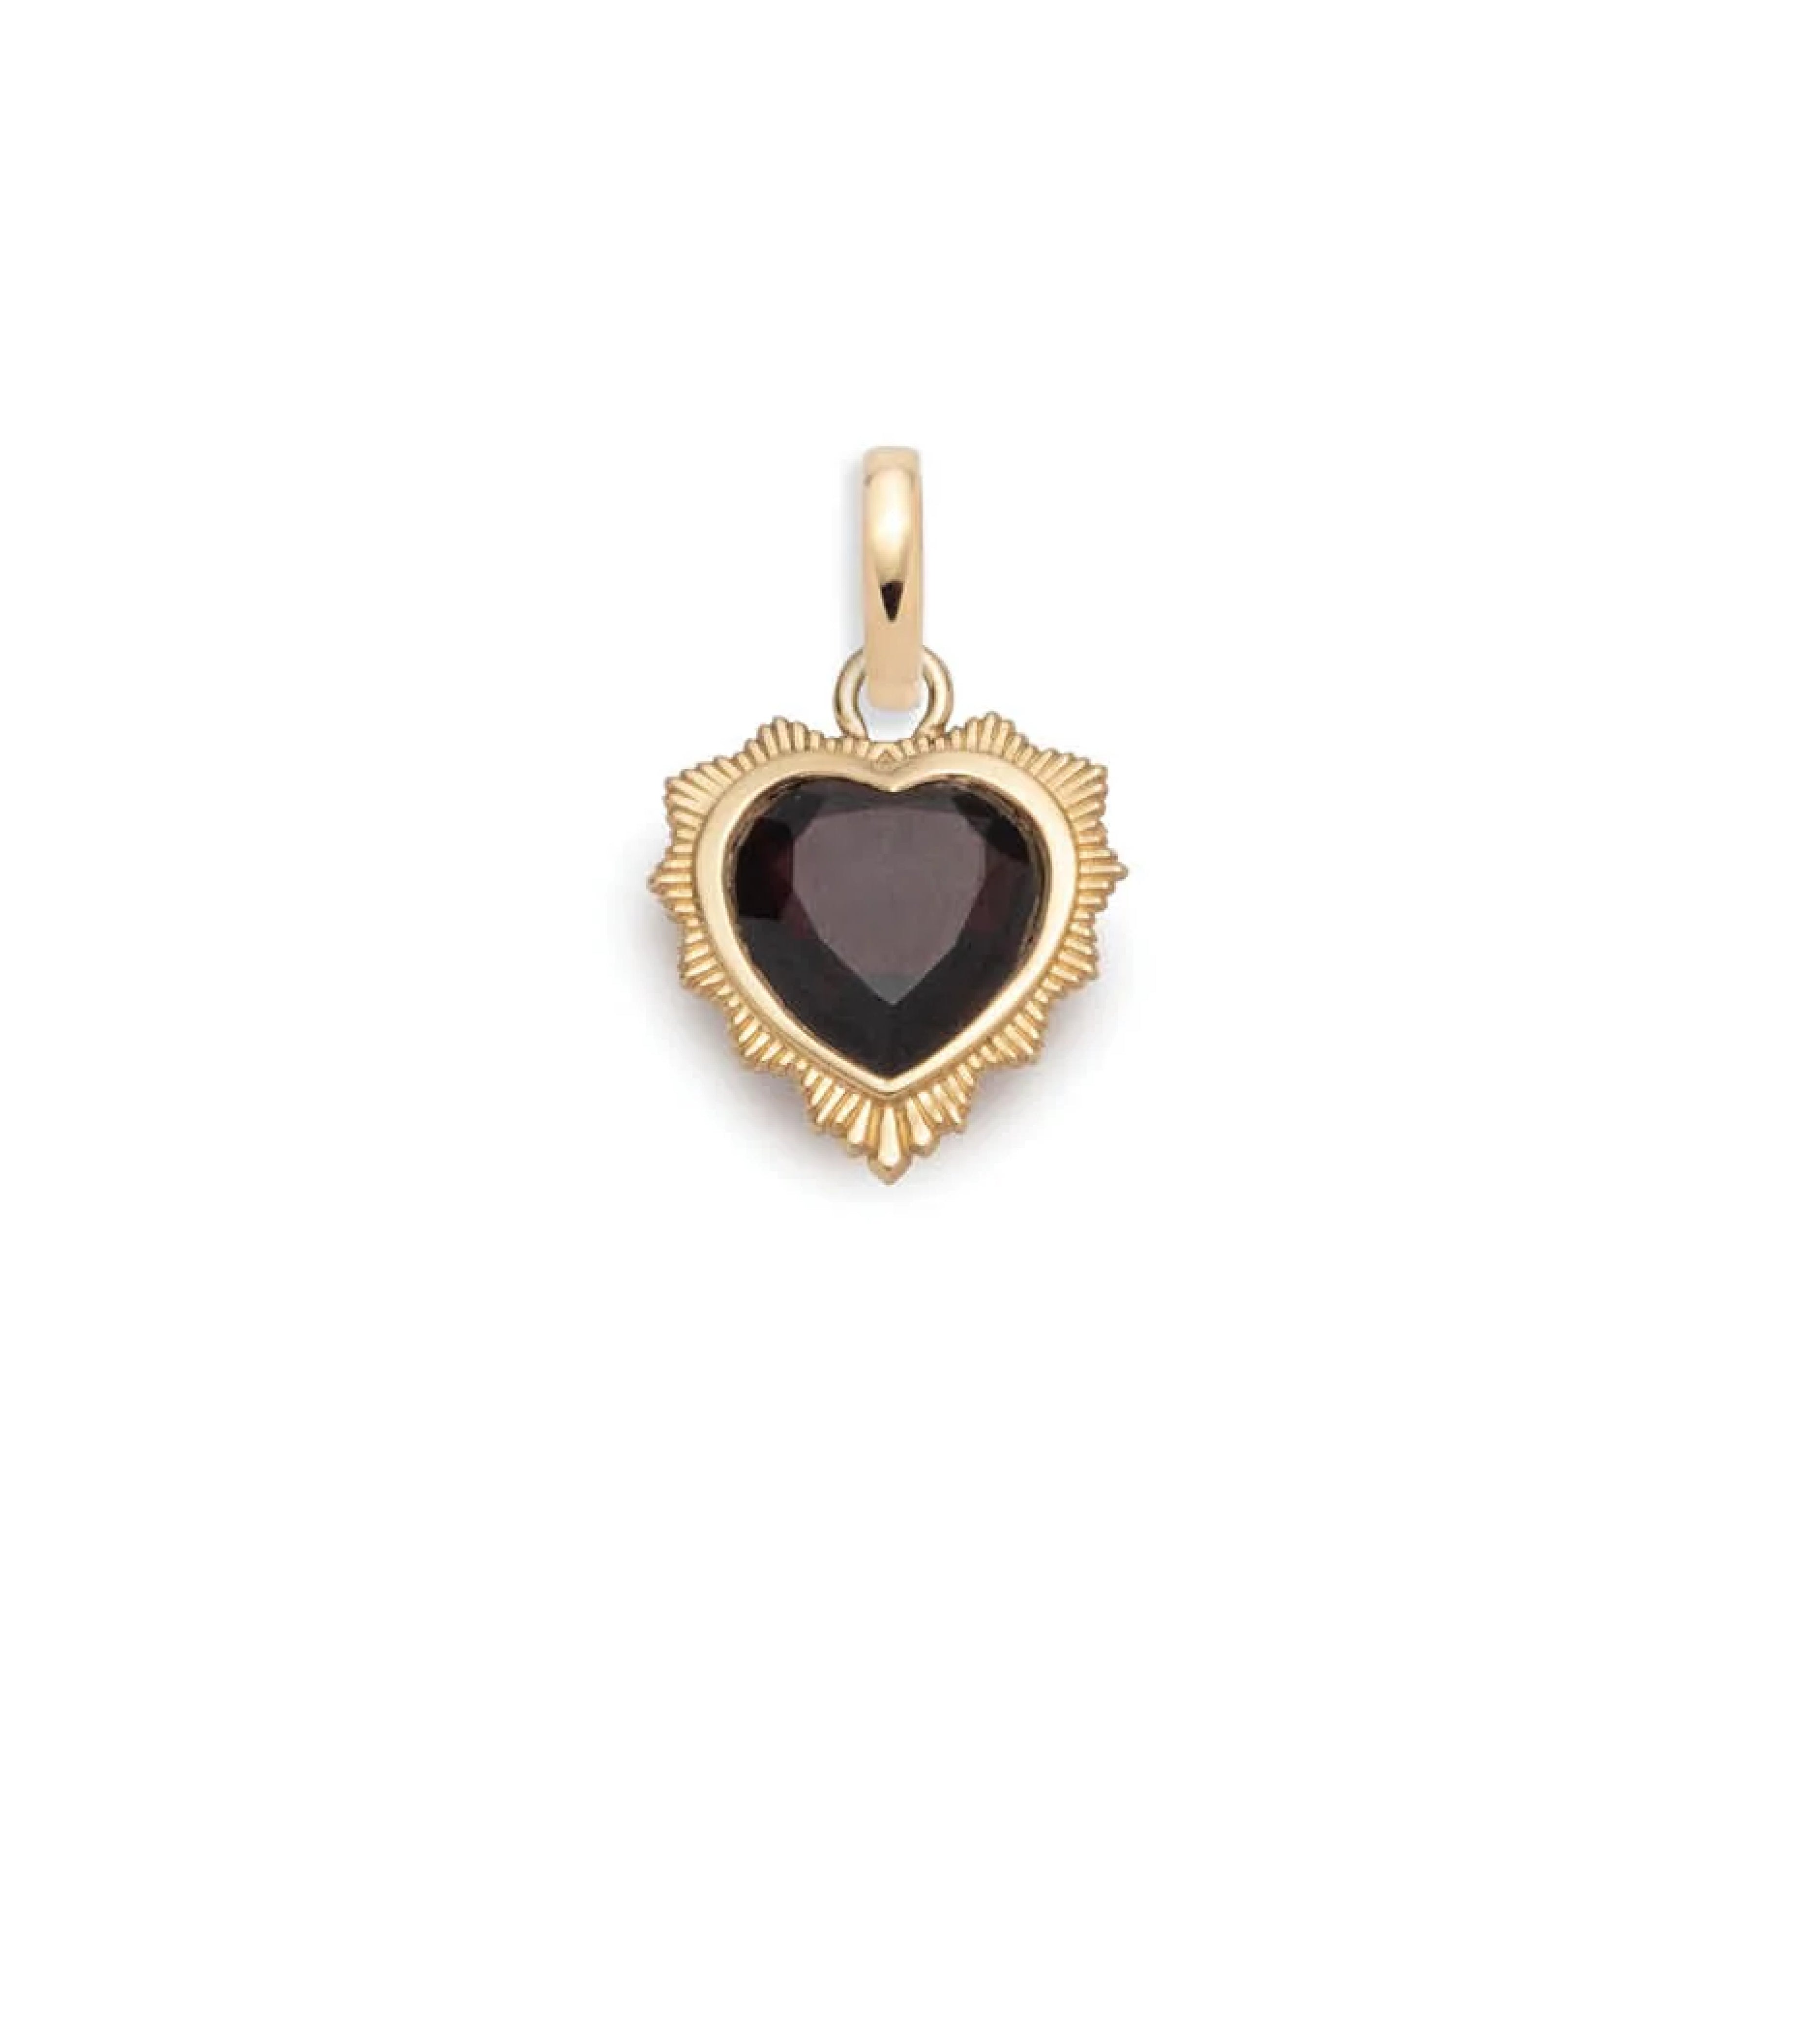 Gemstone Heart - Love : Garnet Medallion with Oval Pushgate